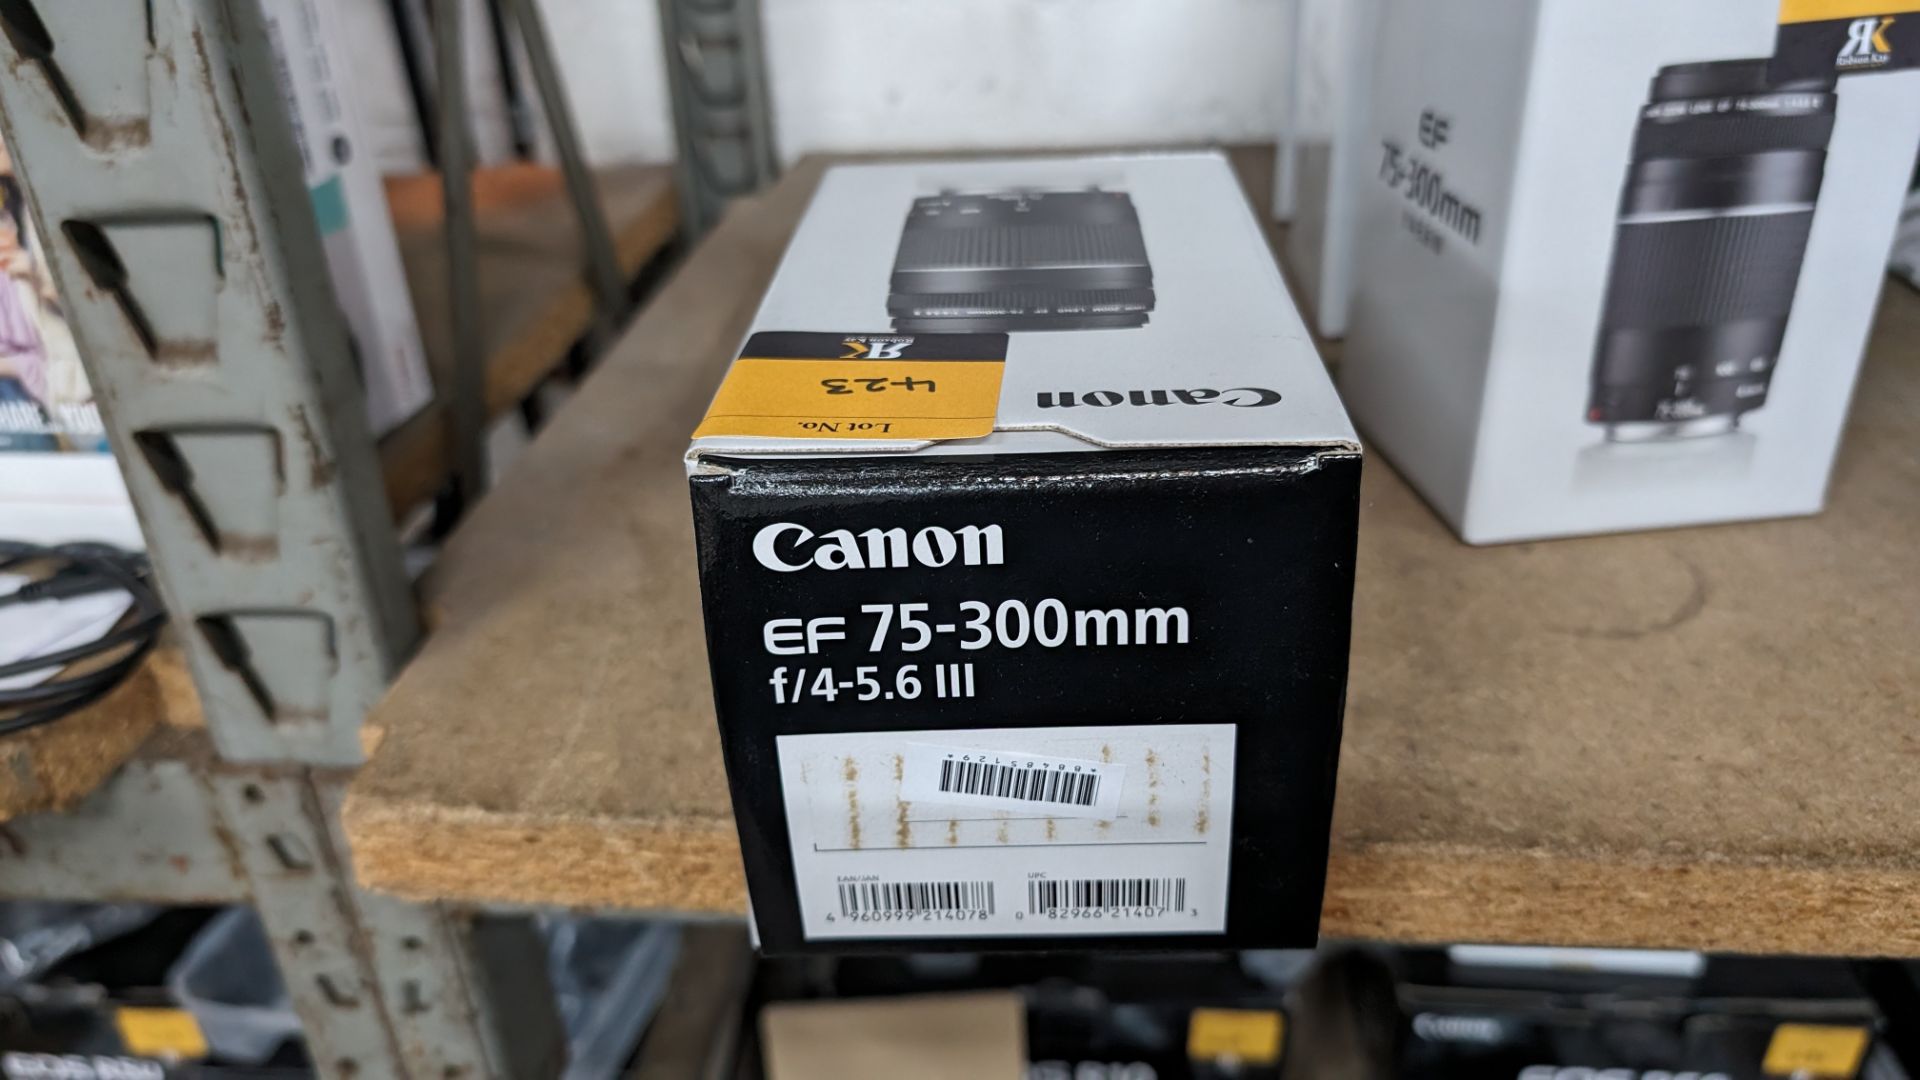 Canon EF 75-300mm lens, f/4-5.6 III - Image 7 of 8